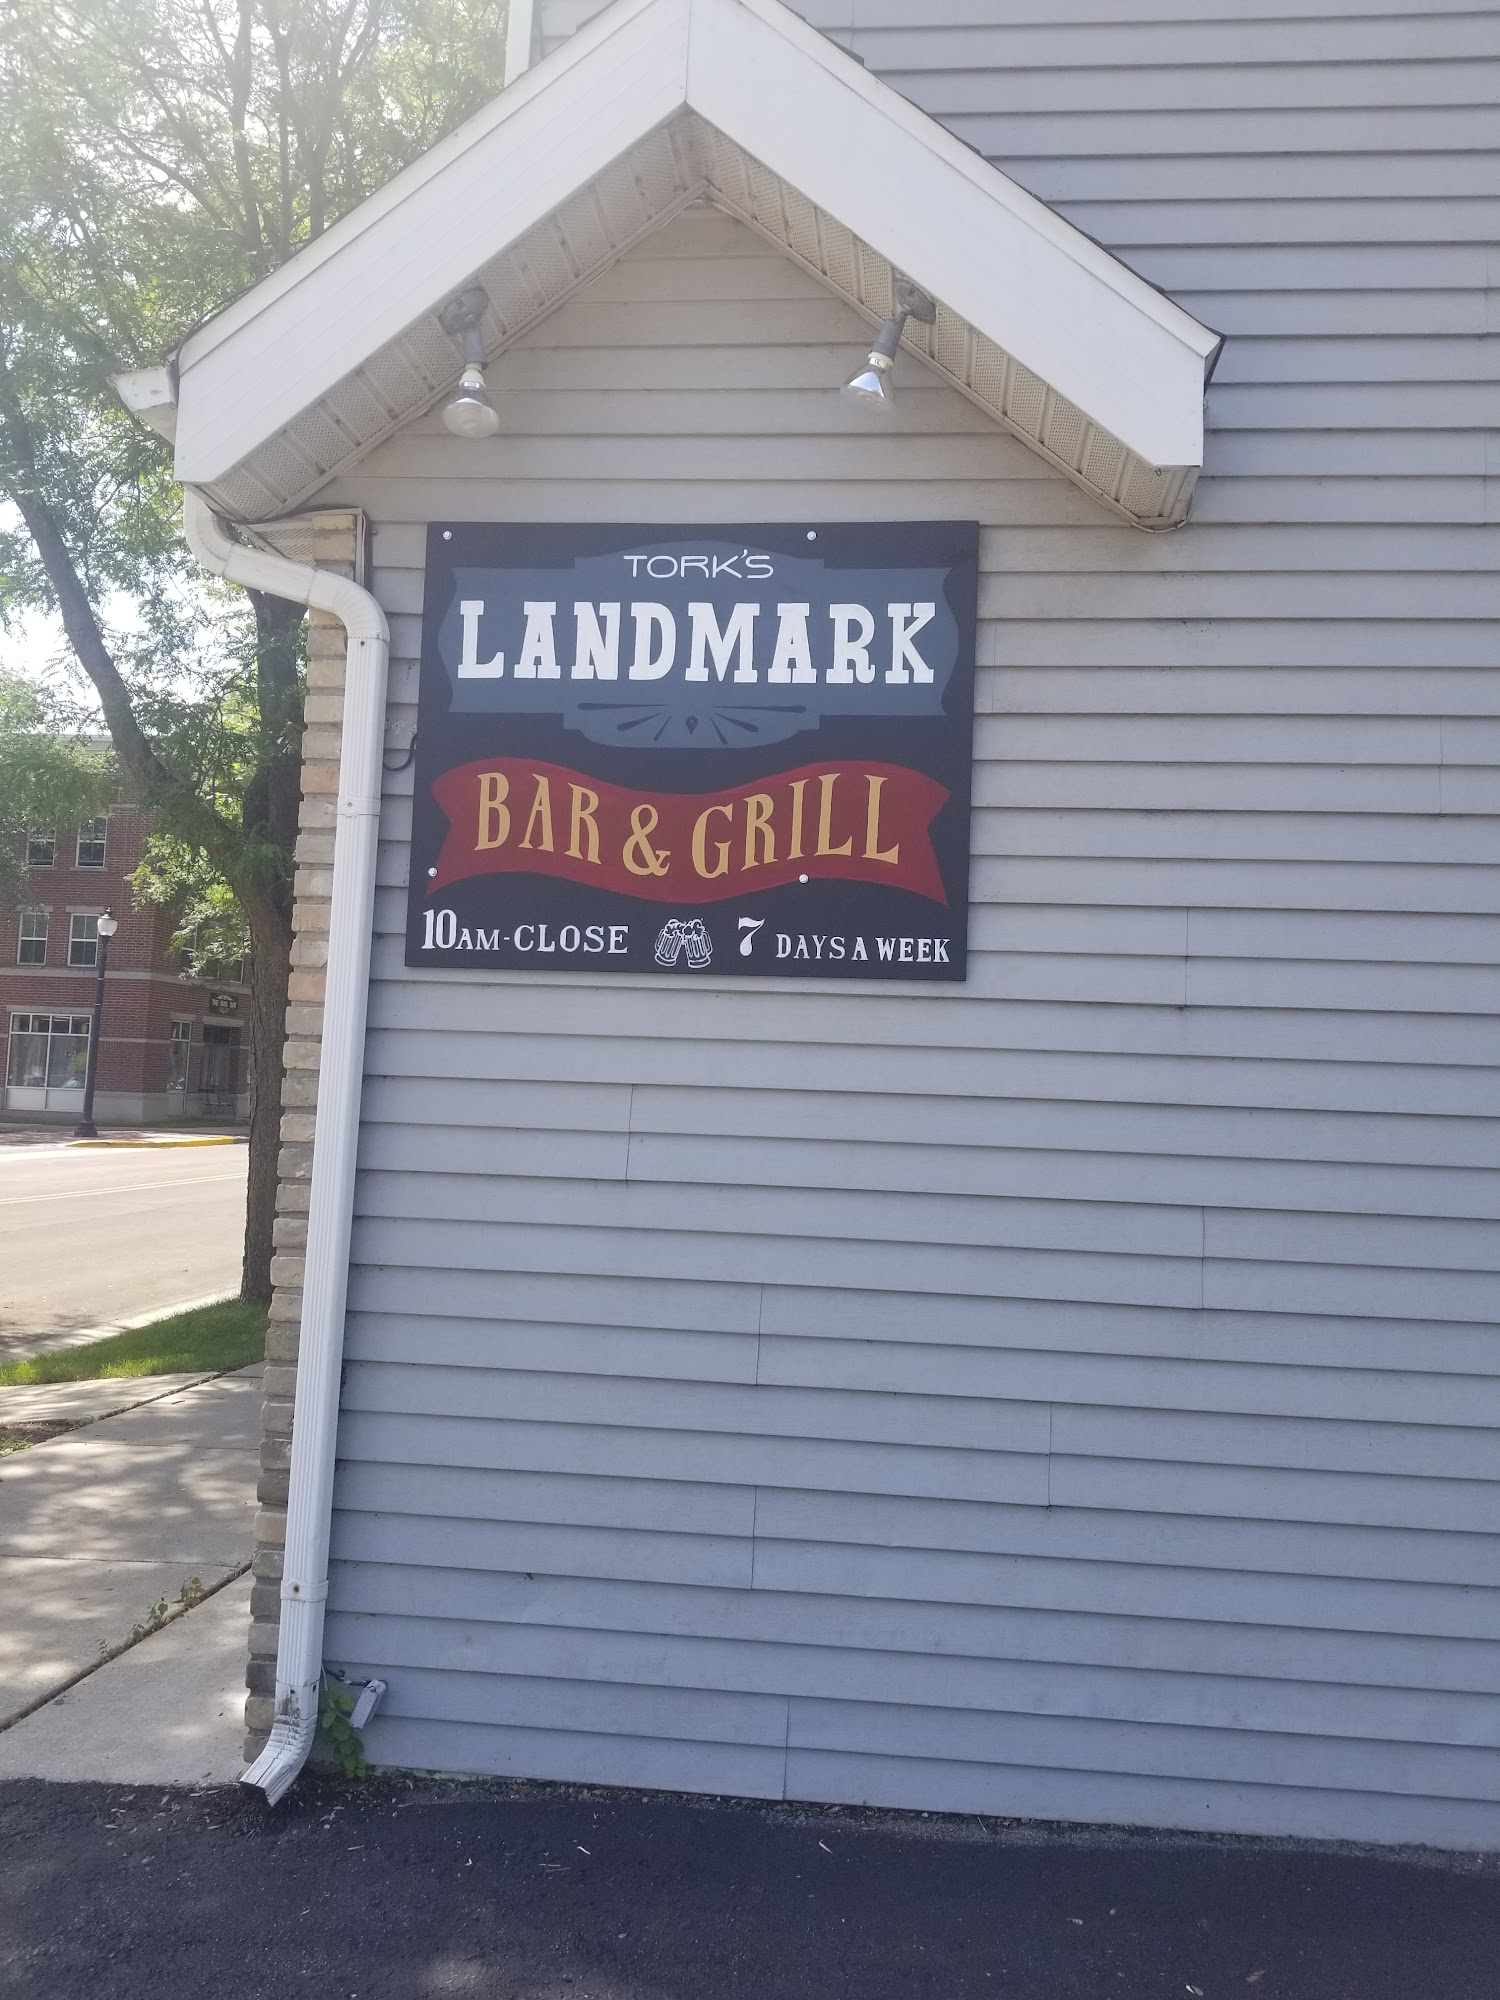 Landmark Bar & Grill